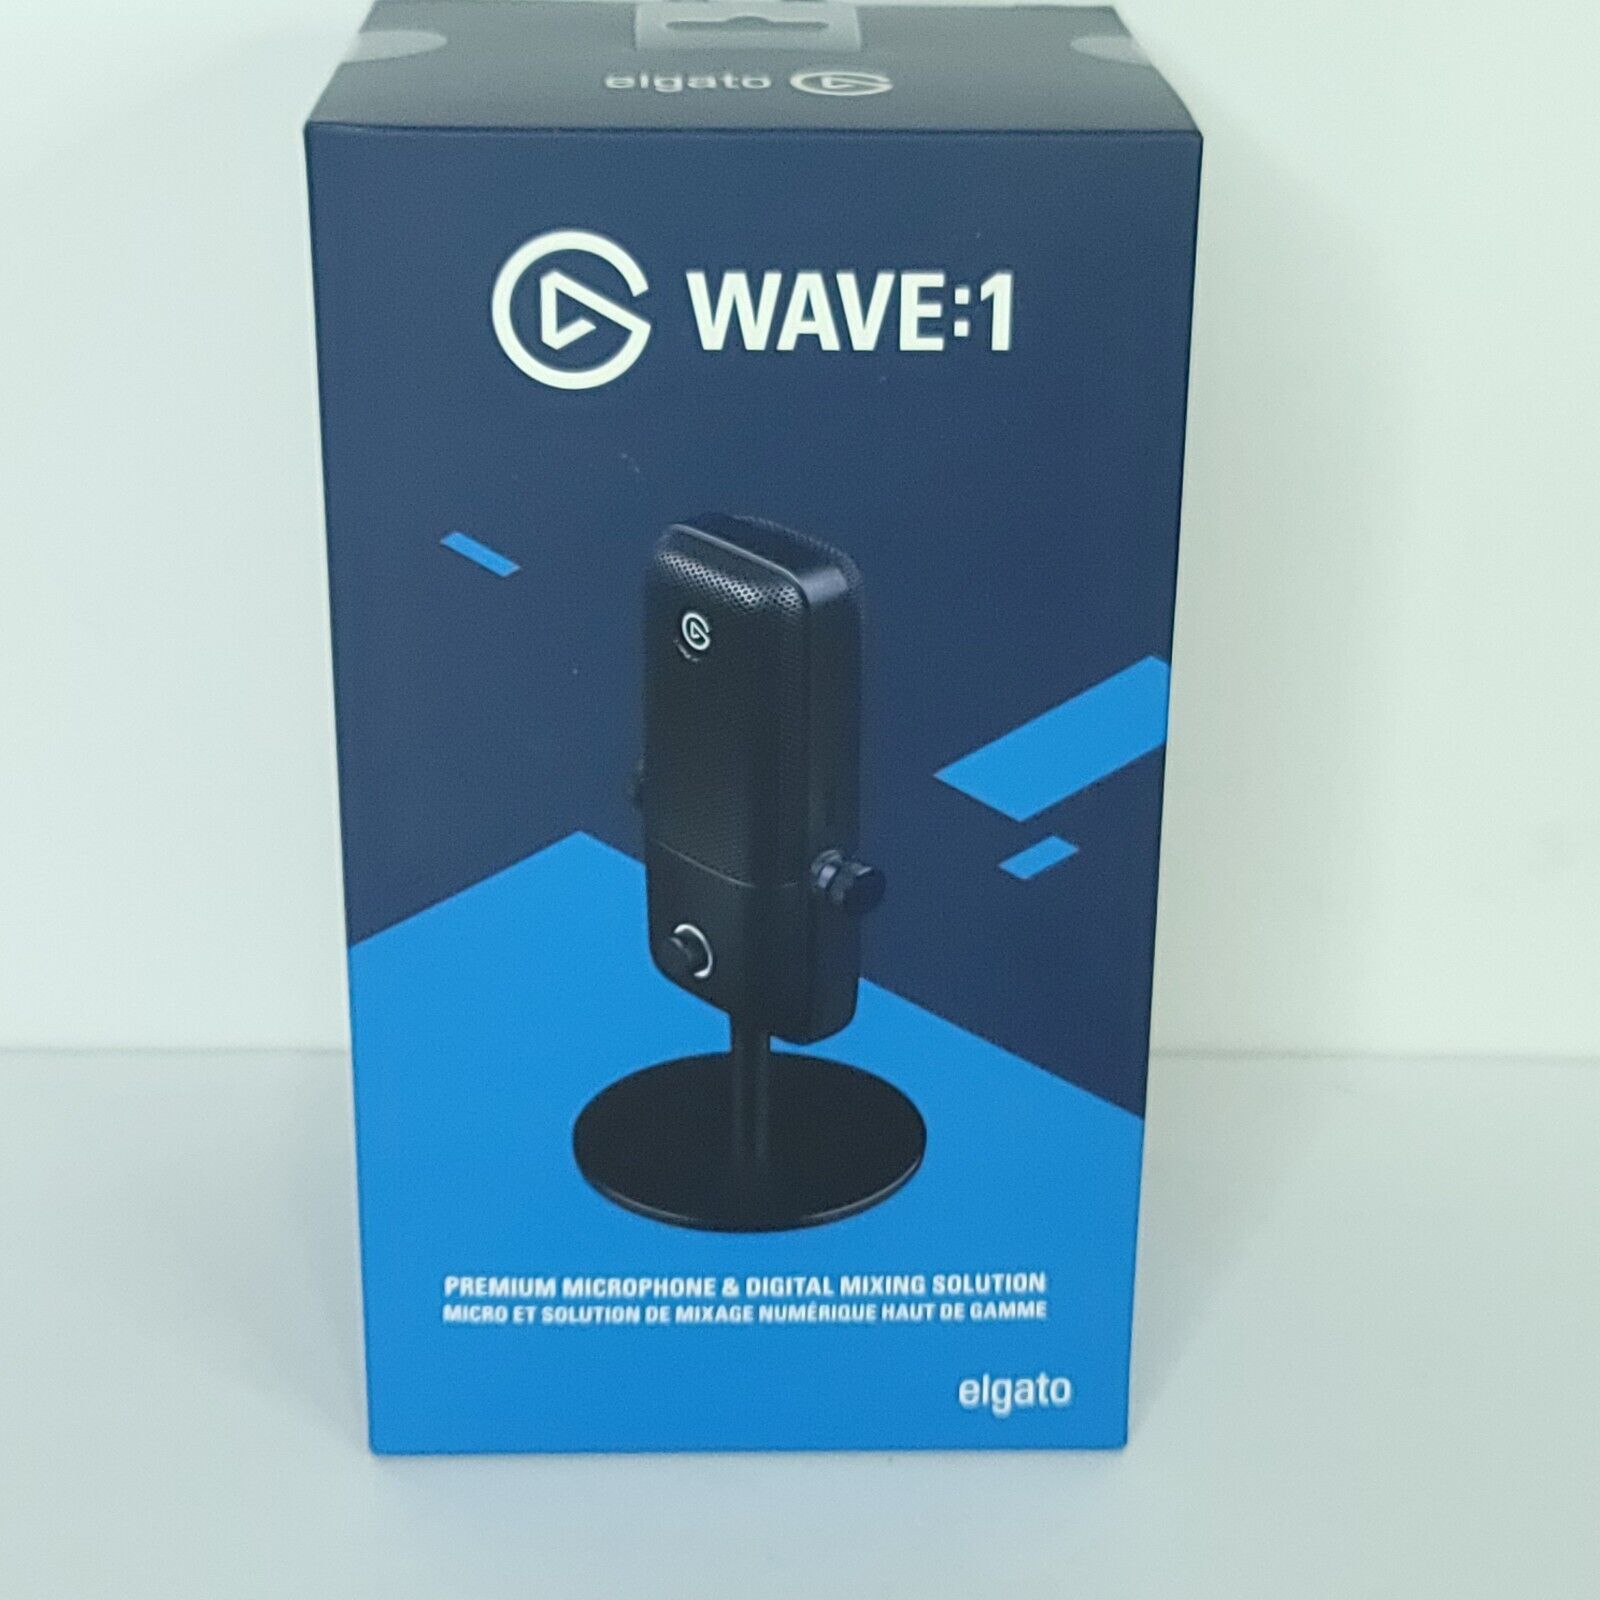 Elgato Wave:1 Premium Microphone Digital Mixing Solution Stream Ready NEW